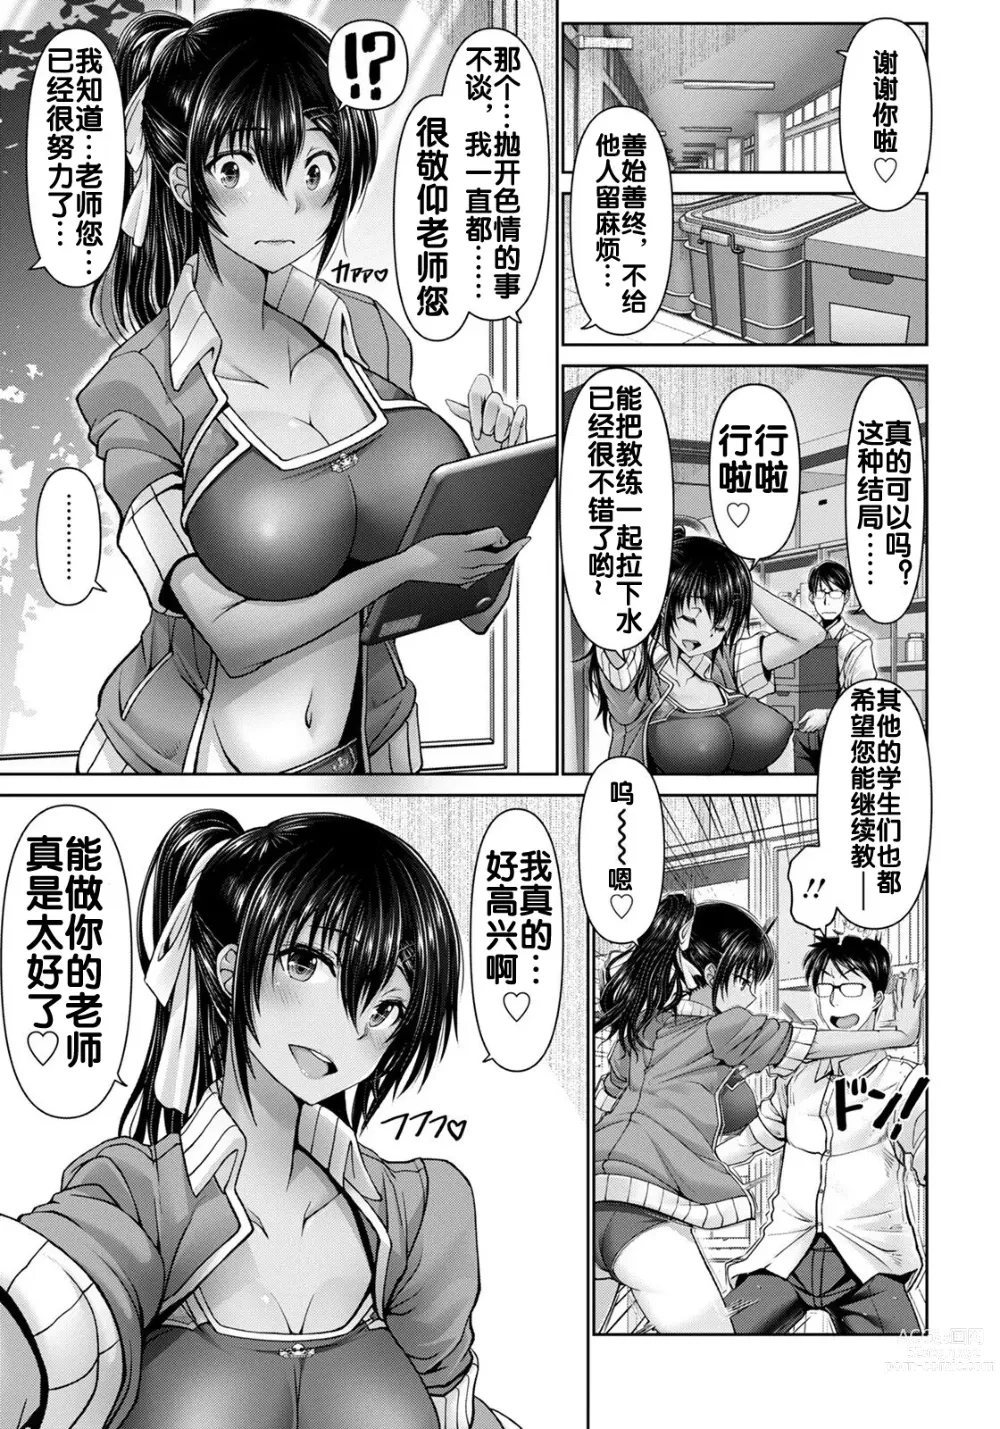 Page 16 of manga Seishun Taiiku Kyoushi